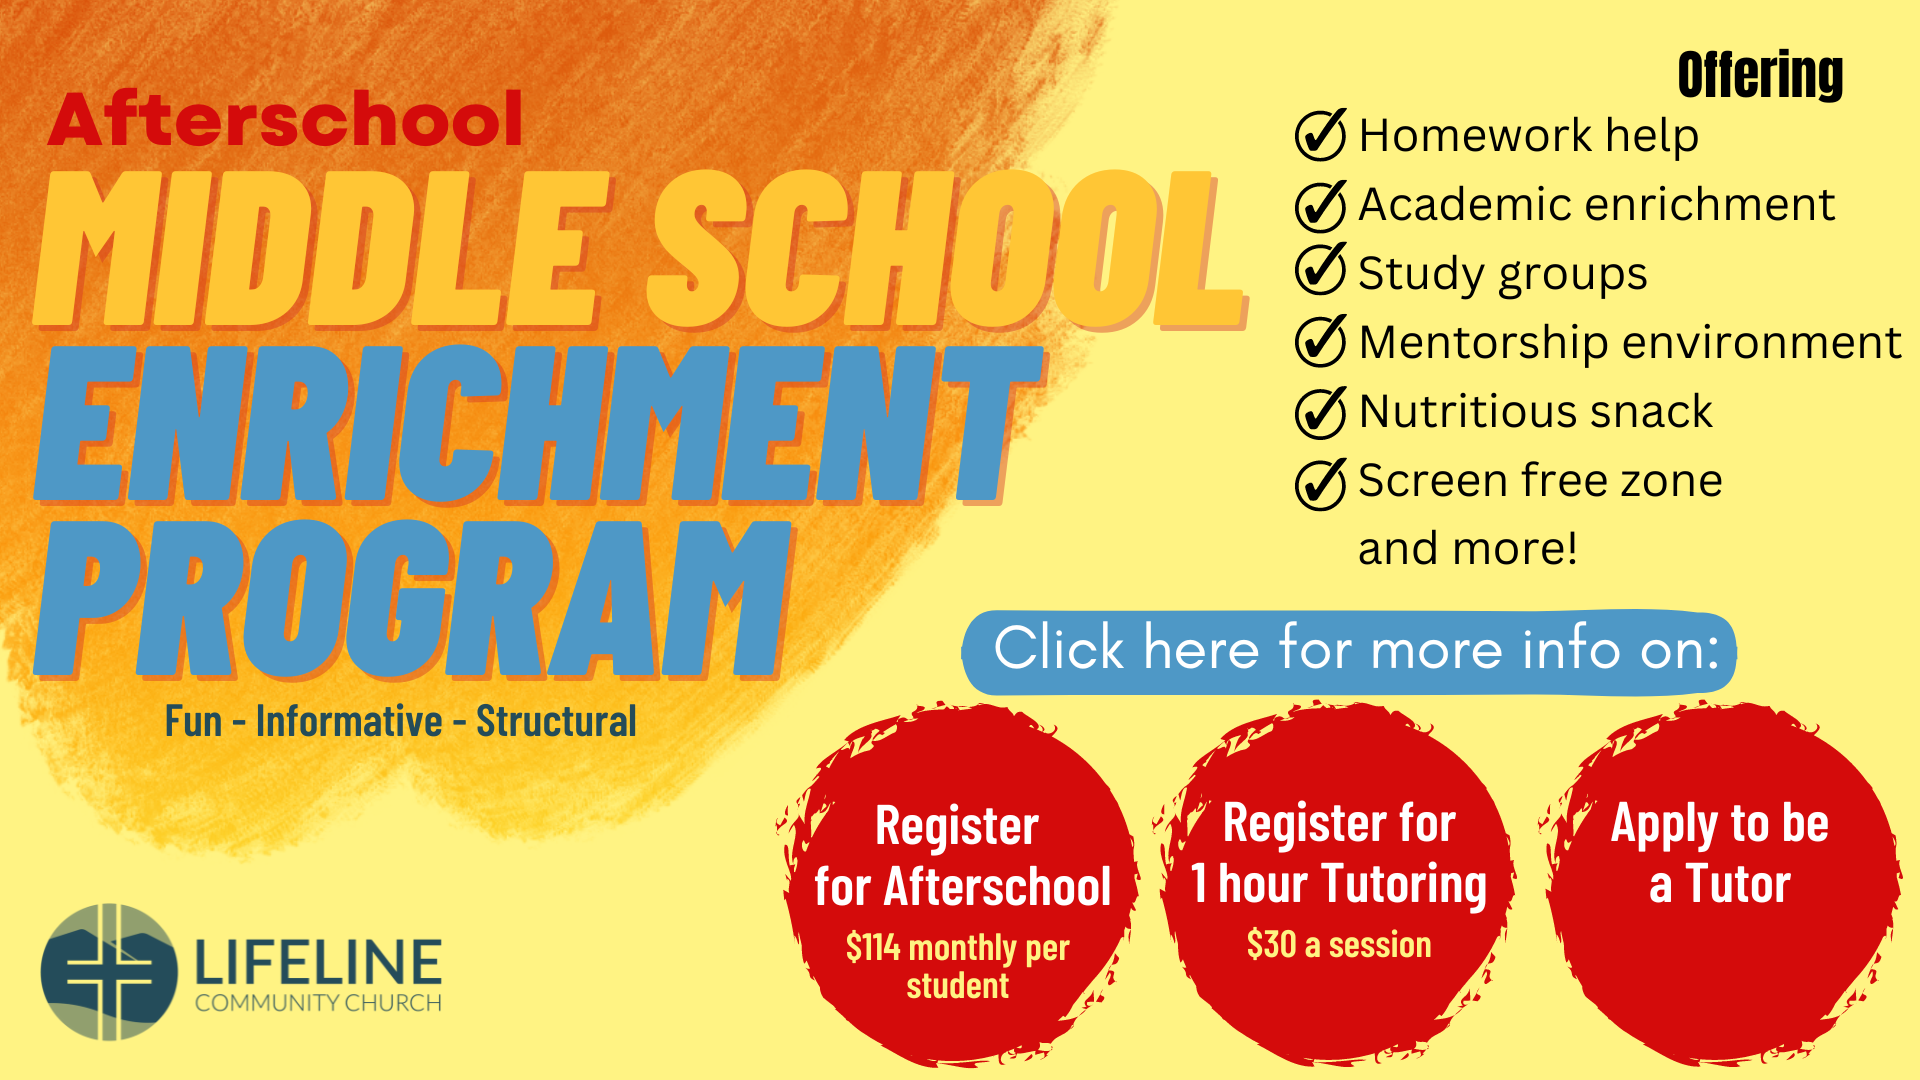 Middle School Enrichment Program - click here